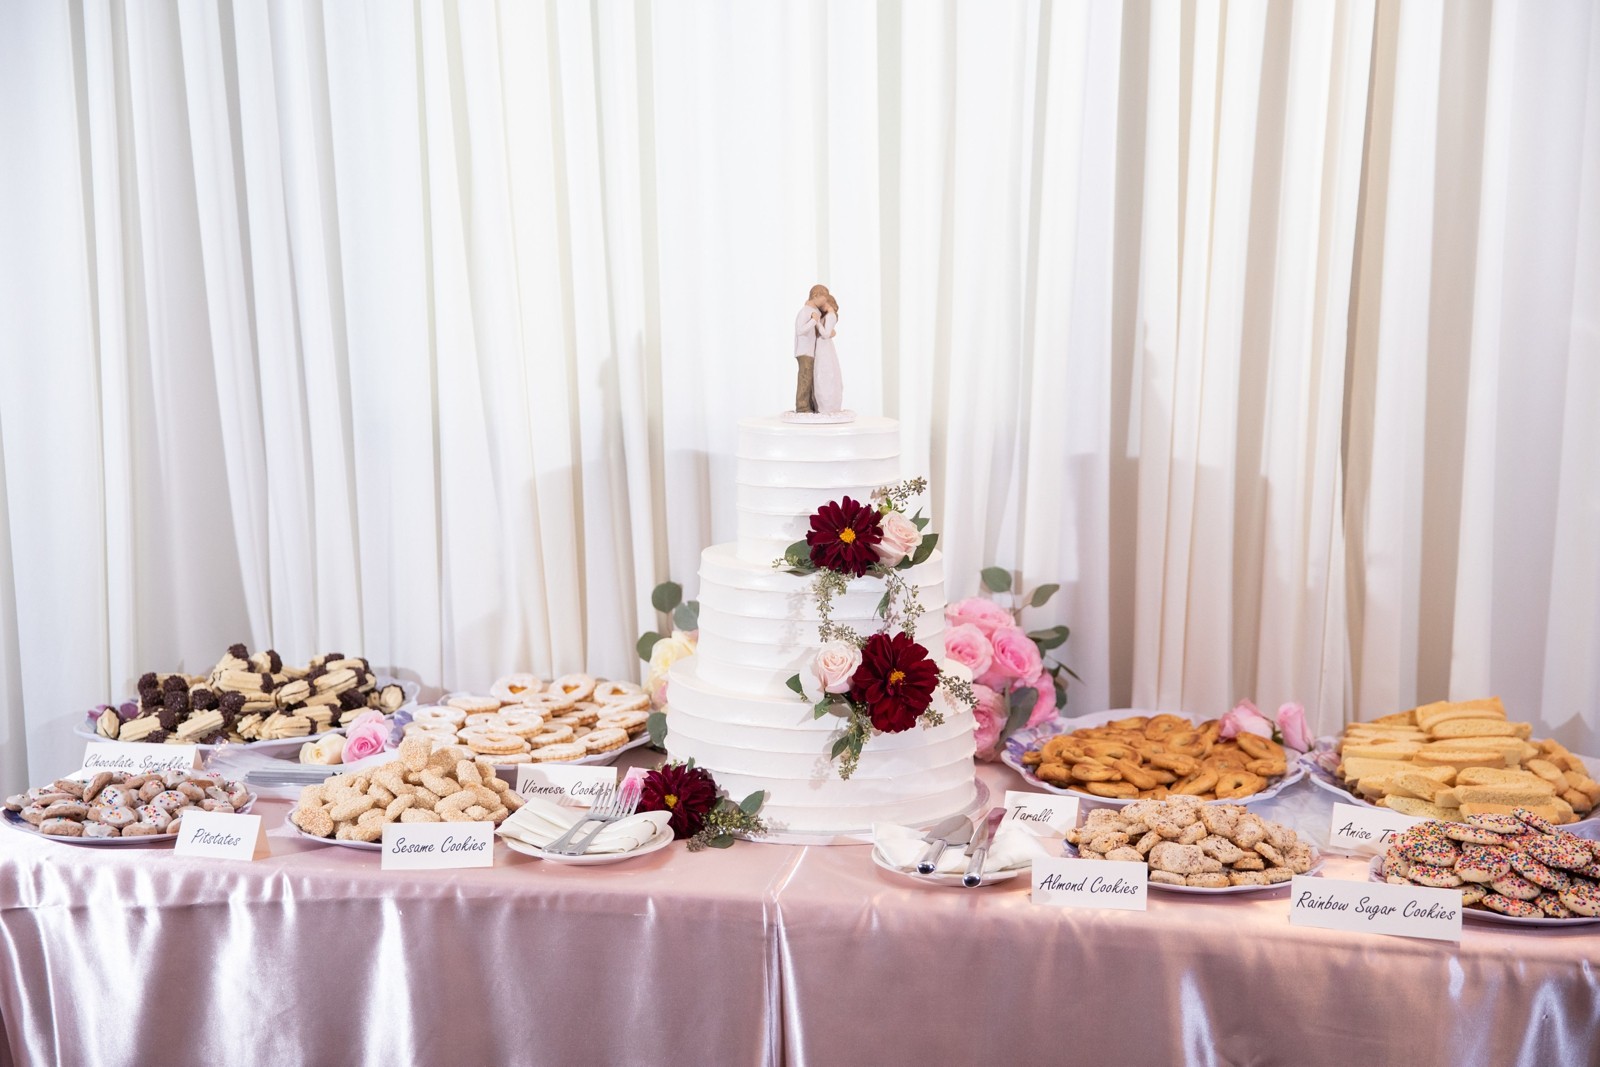 Wedding Cake and dessert bar